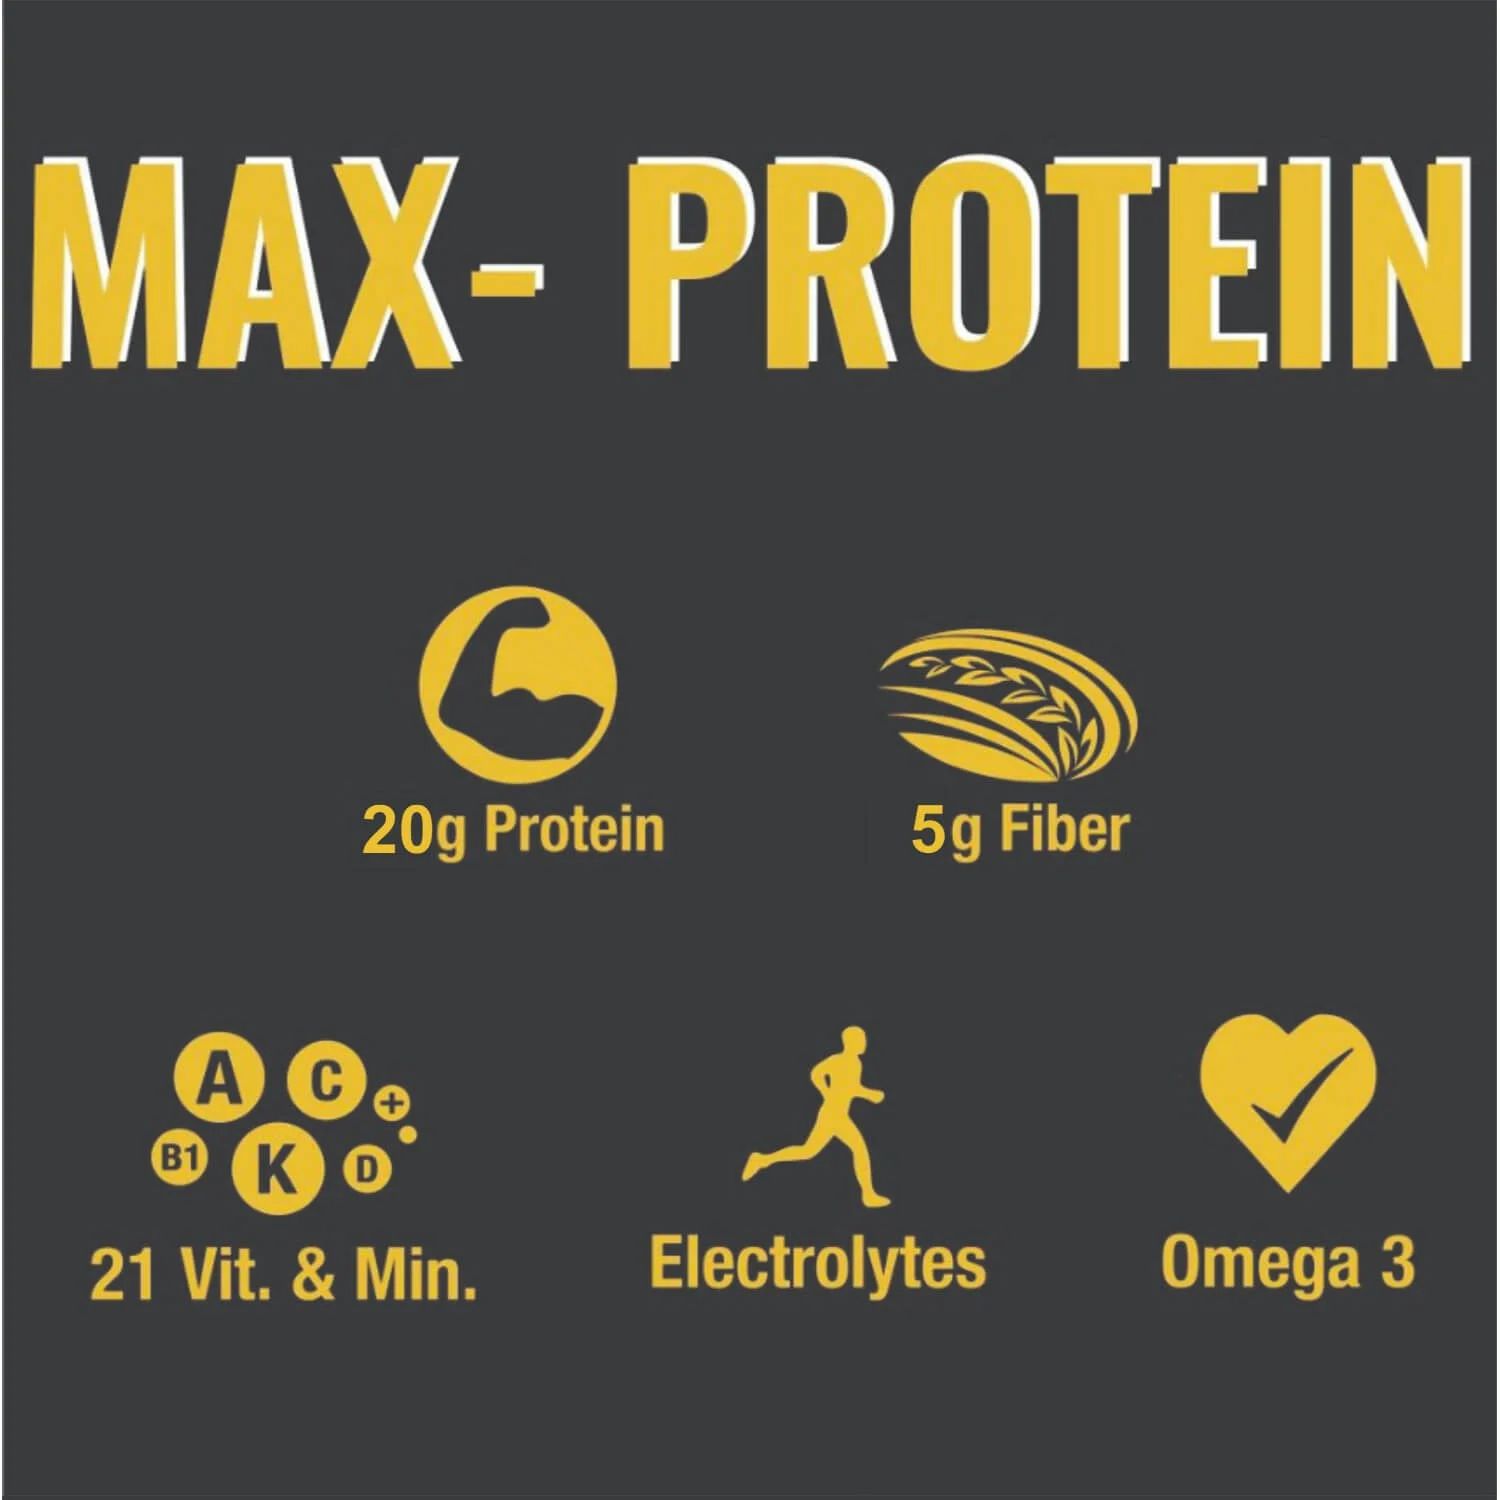 Image Of Ritebite Max Protein Active Beast Nutrition